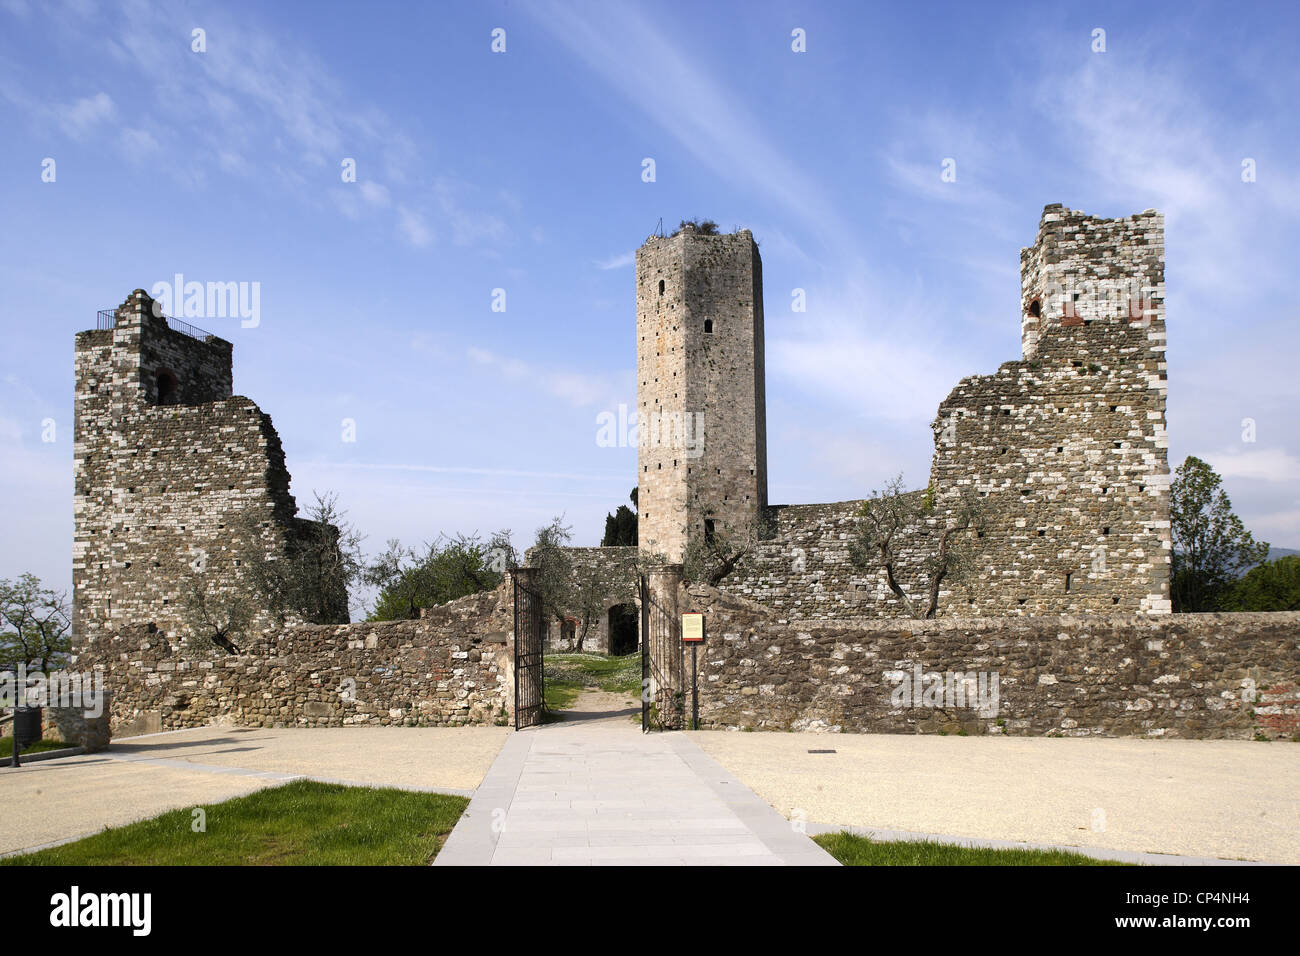 La nueva fortaleza con la Torre hexagonal, siglo 14. Serravalle Pistoiese, la provincia de Pistoia, Región de Toscana, Italia. Foto de stock